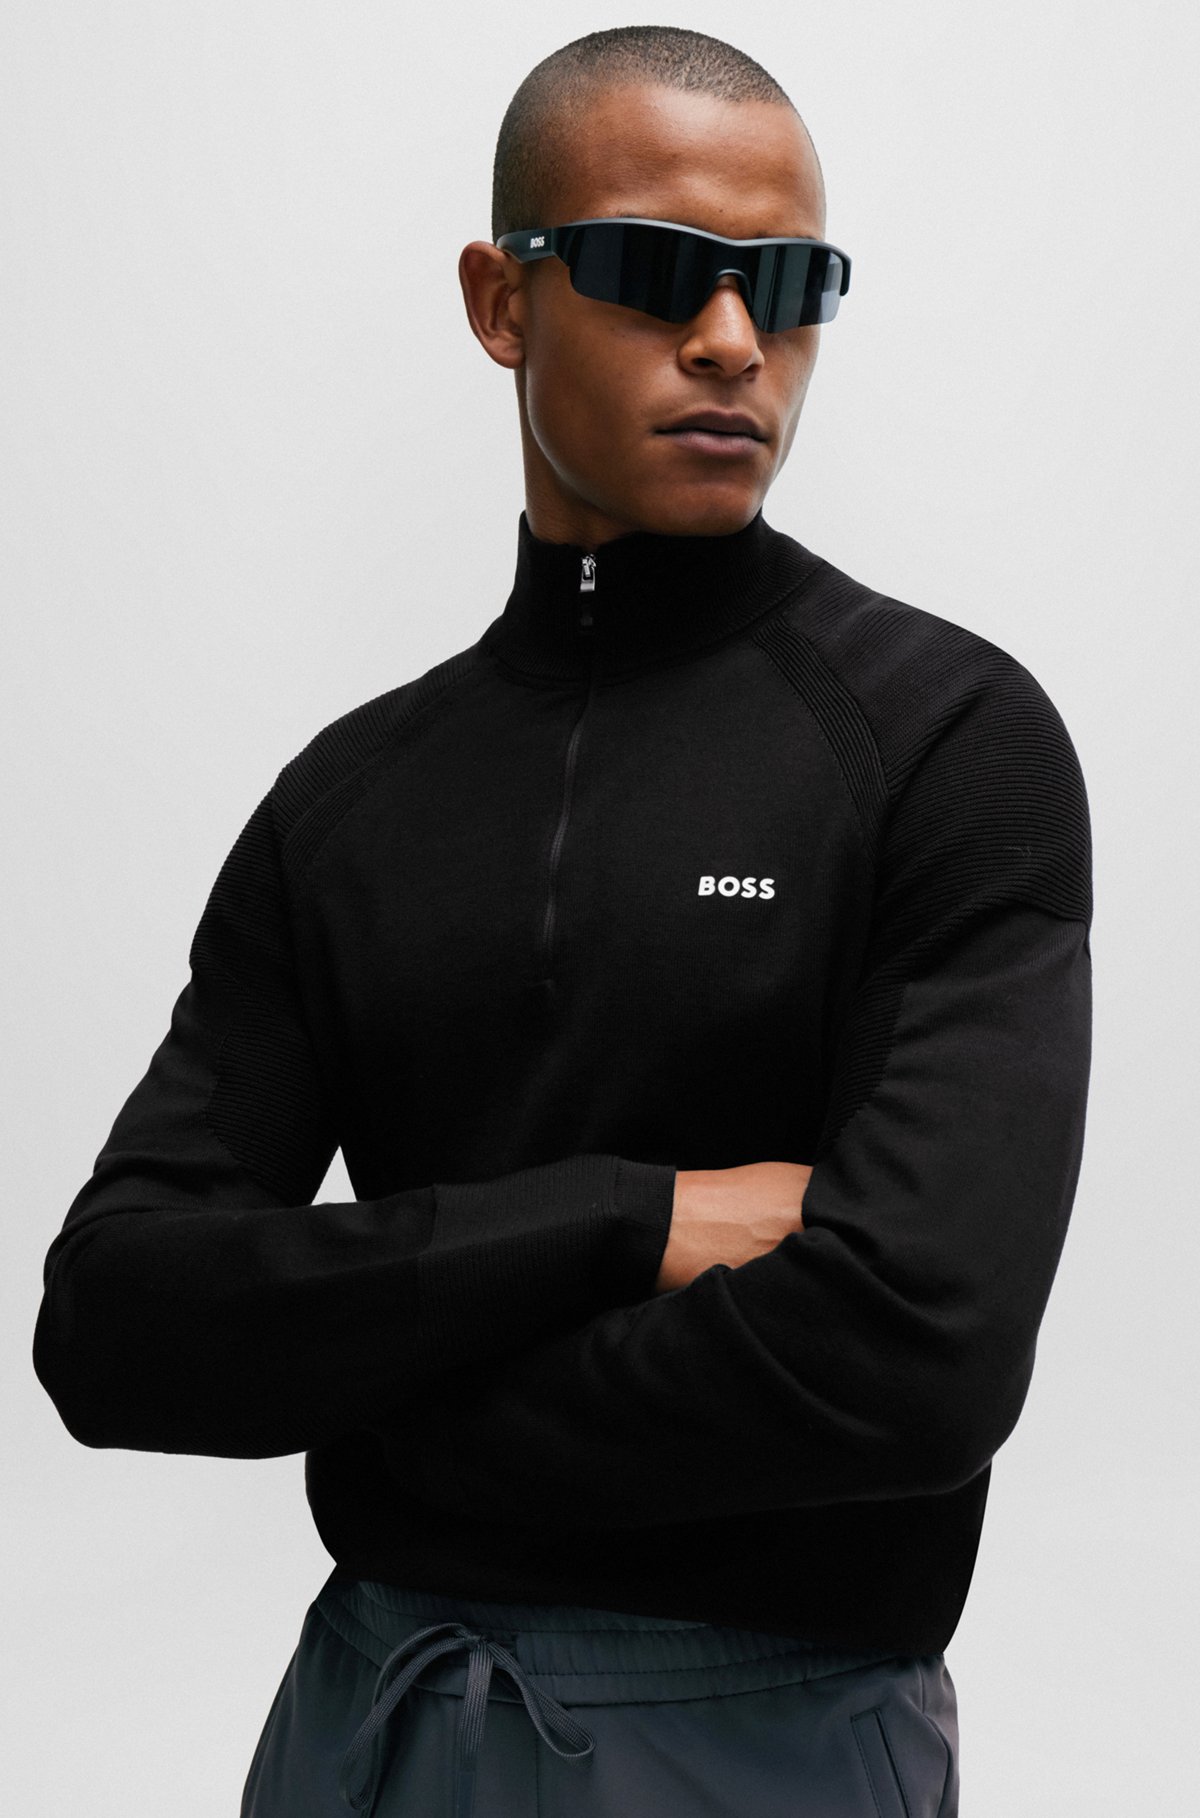 Cotton-blend zip-neck sweater with logo detail, Black